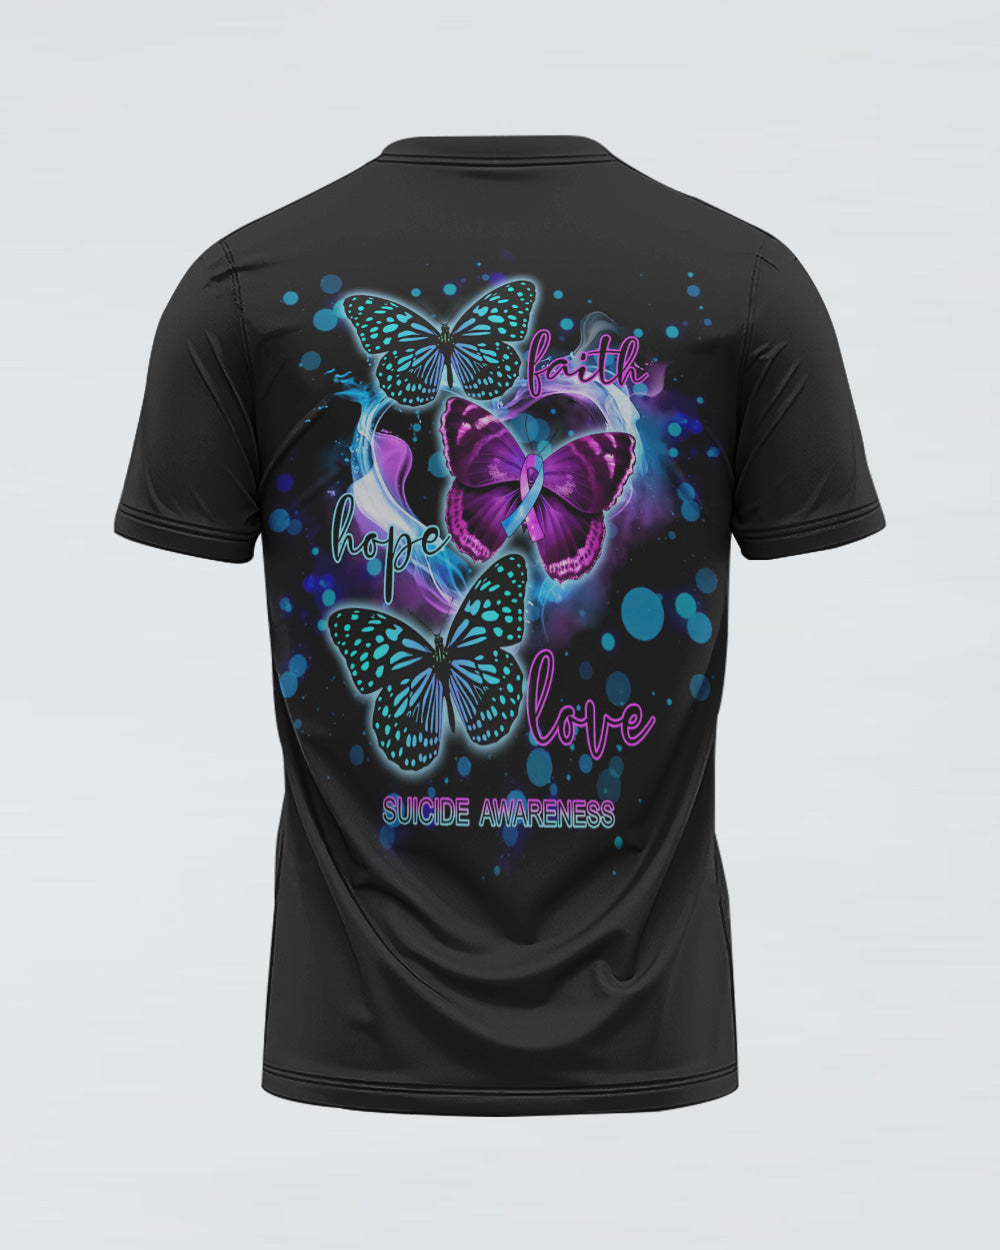 Butterfly Faith Hope Love Heart Women's Suicide Prevention Awareness Tshirt